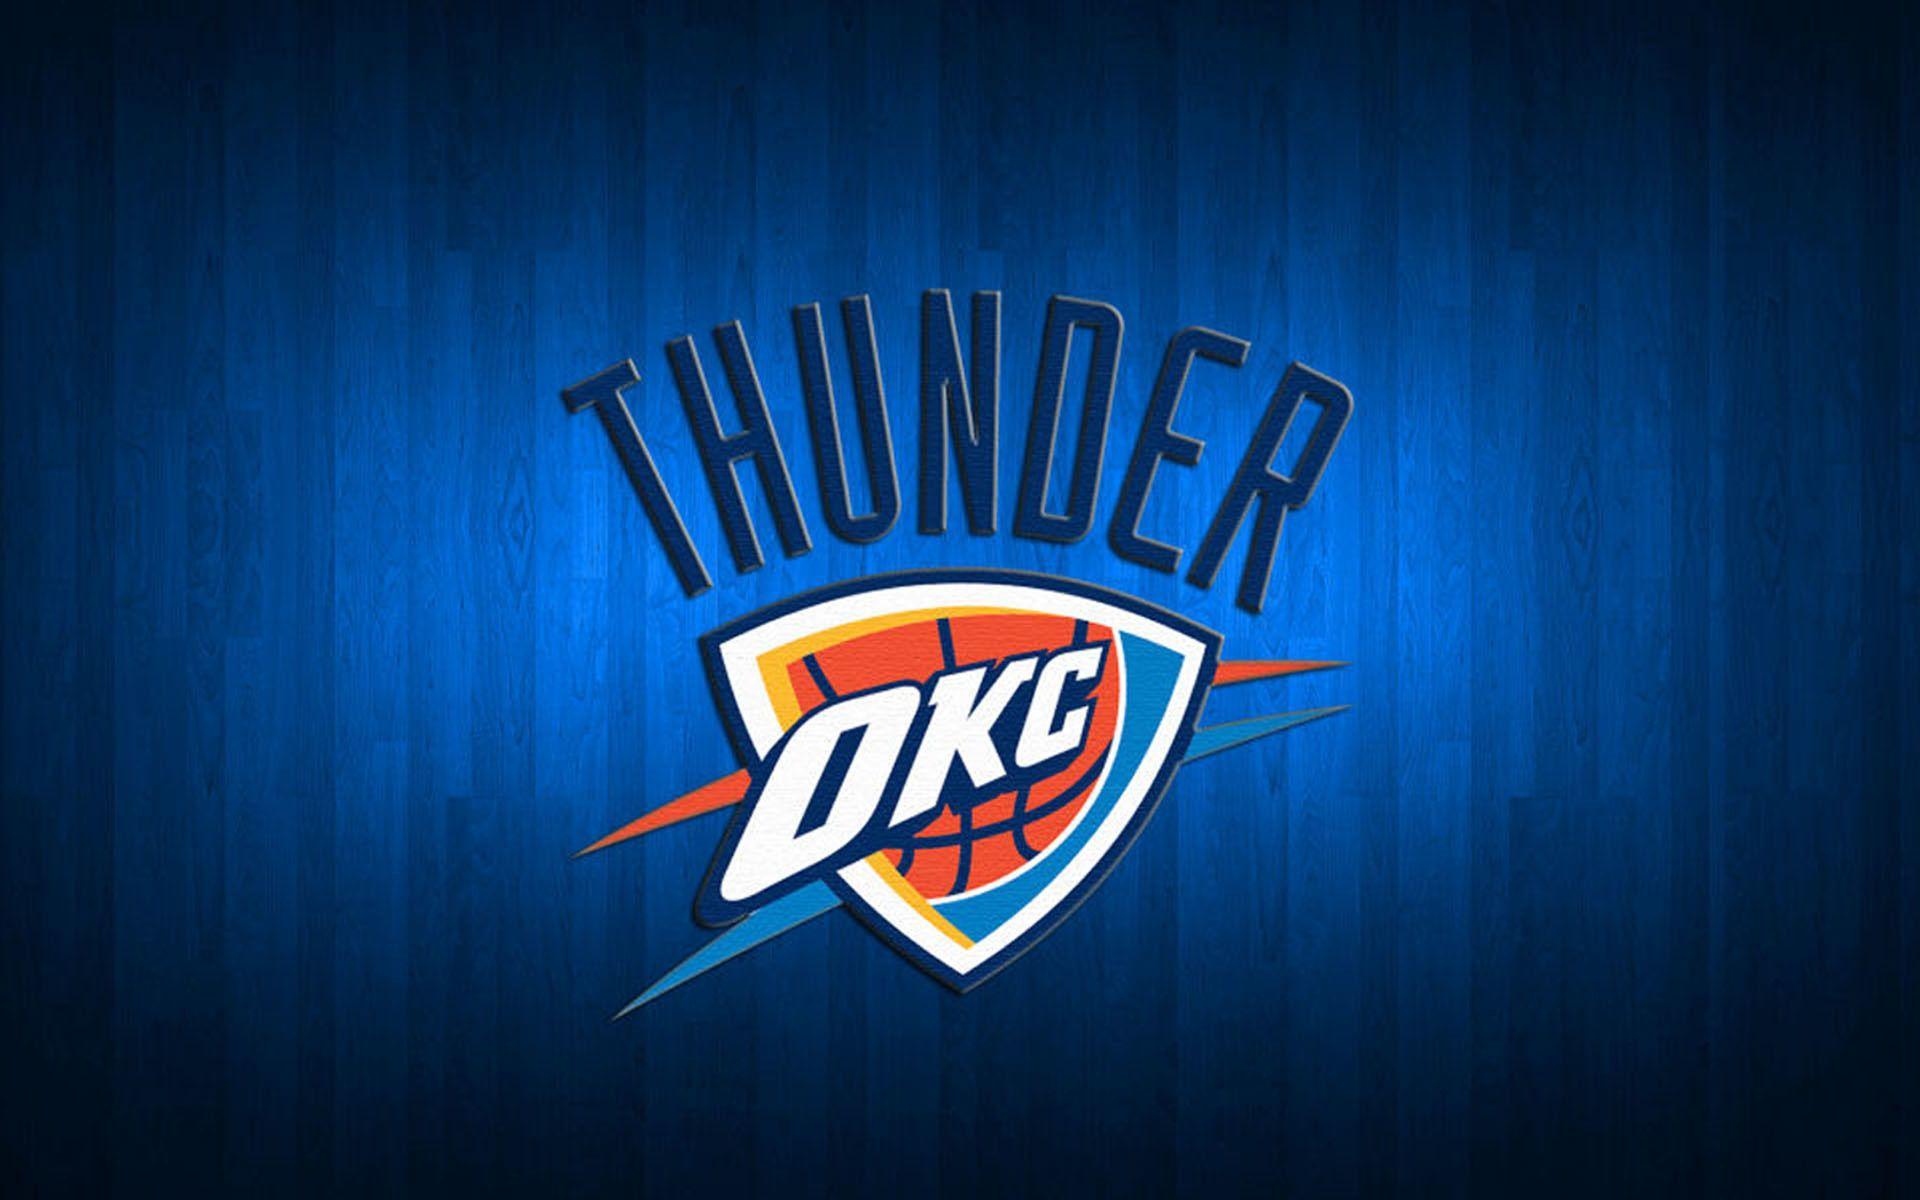 okc oklahoma thunder wallpaper iphone  android  Okc thunder  basketball Thunder basketball Okc thunder